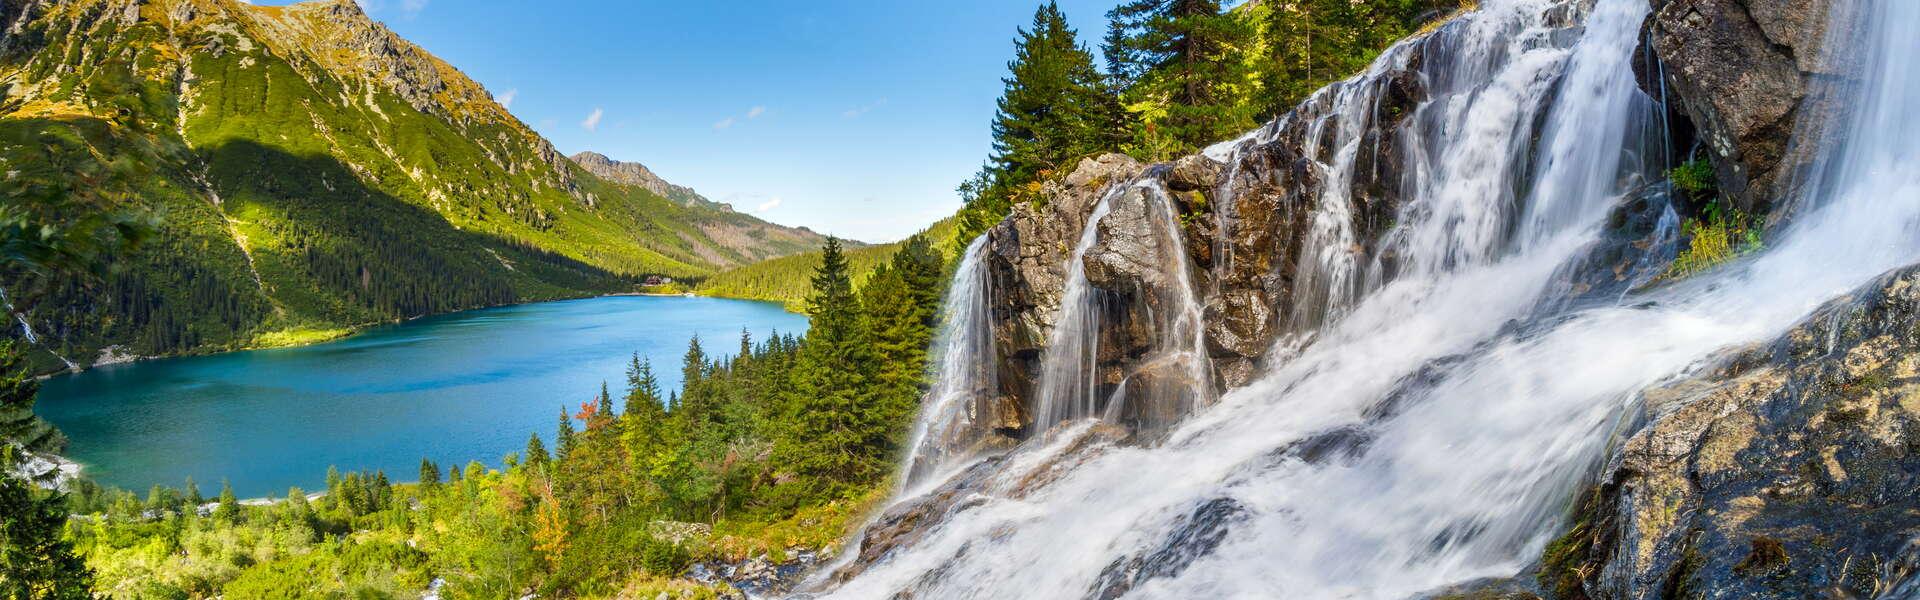 A waterfall and a lake among high mountains